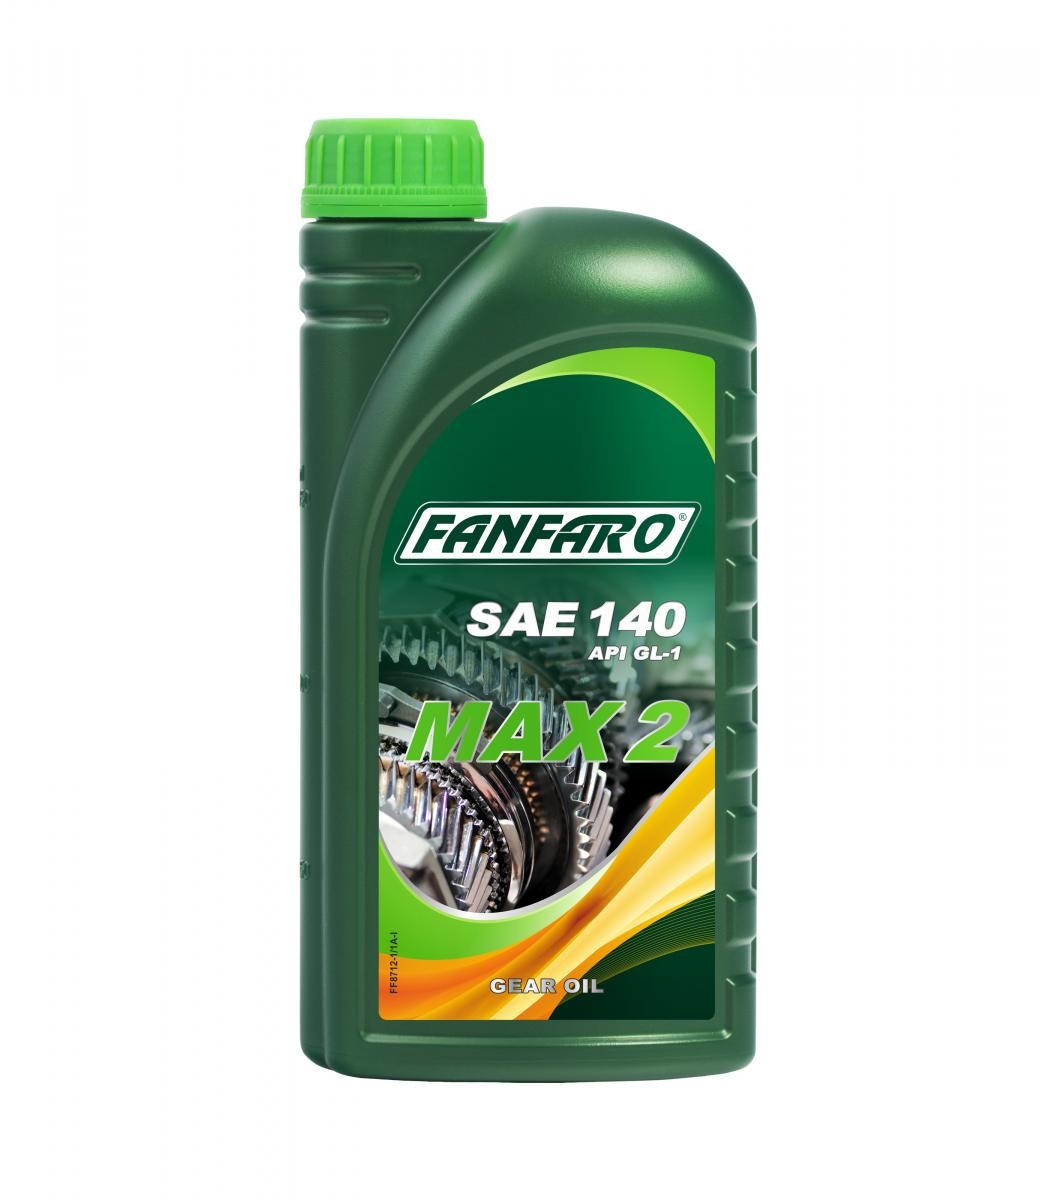 FANFARO Max 2 SAE 140, Inhalt: 1l API GL-1 Getriebeöl FF8712-1 kaufen